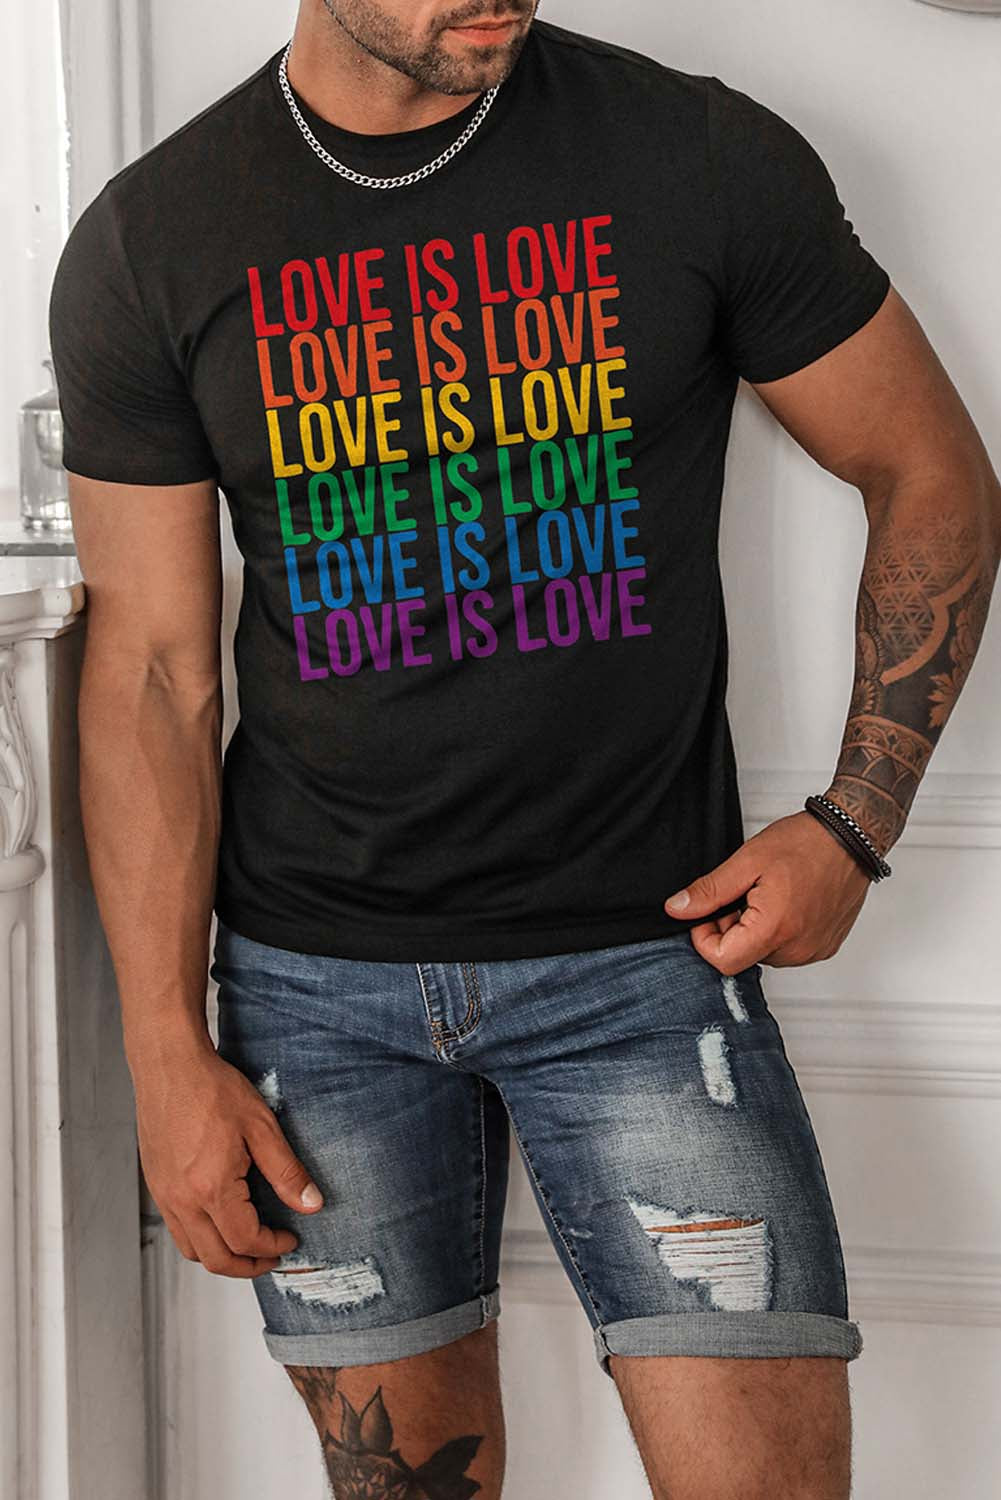 Rainbow Lgbt & Gay Pride Jersey | Lgbt Pride Store 2XL